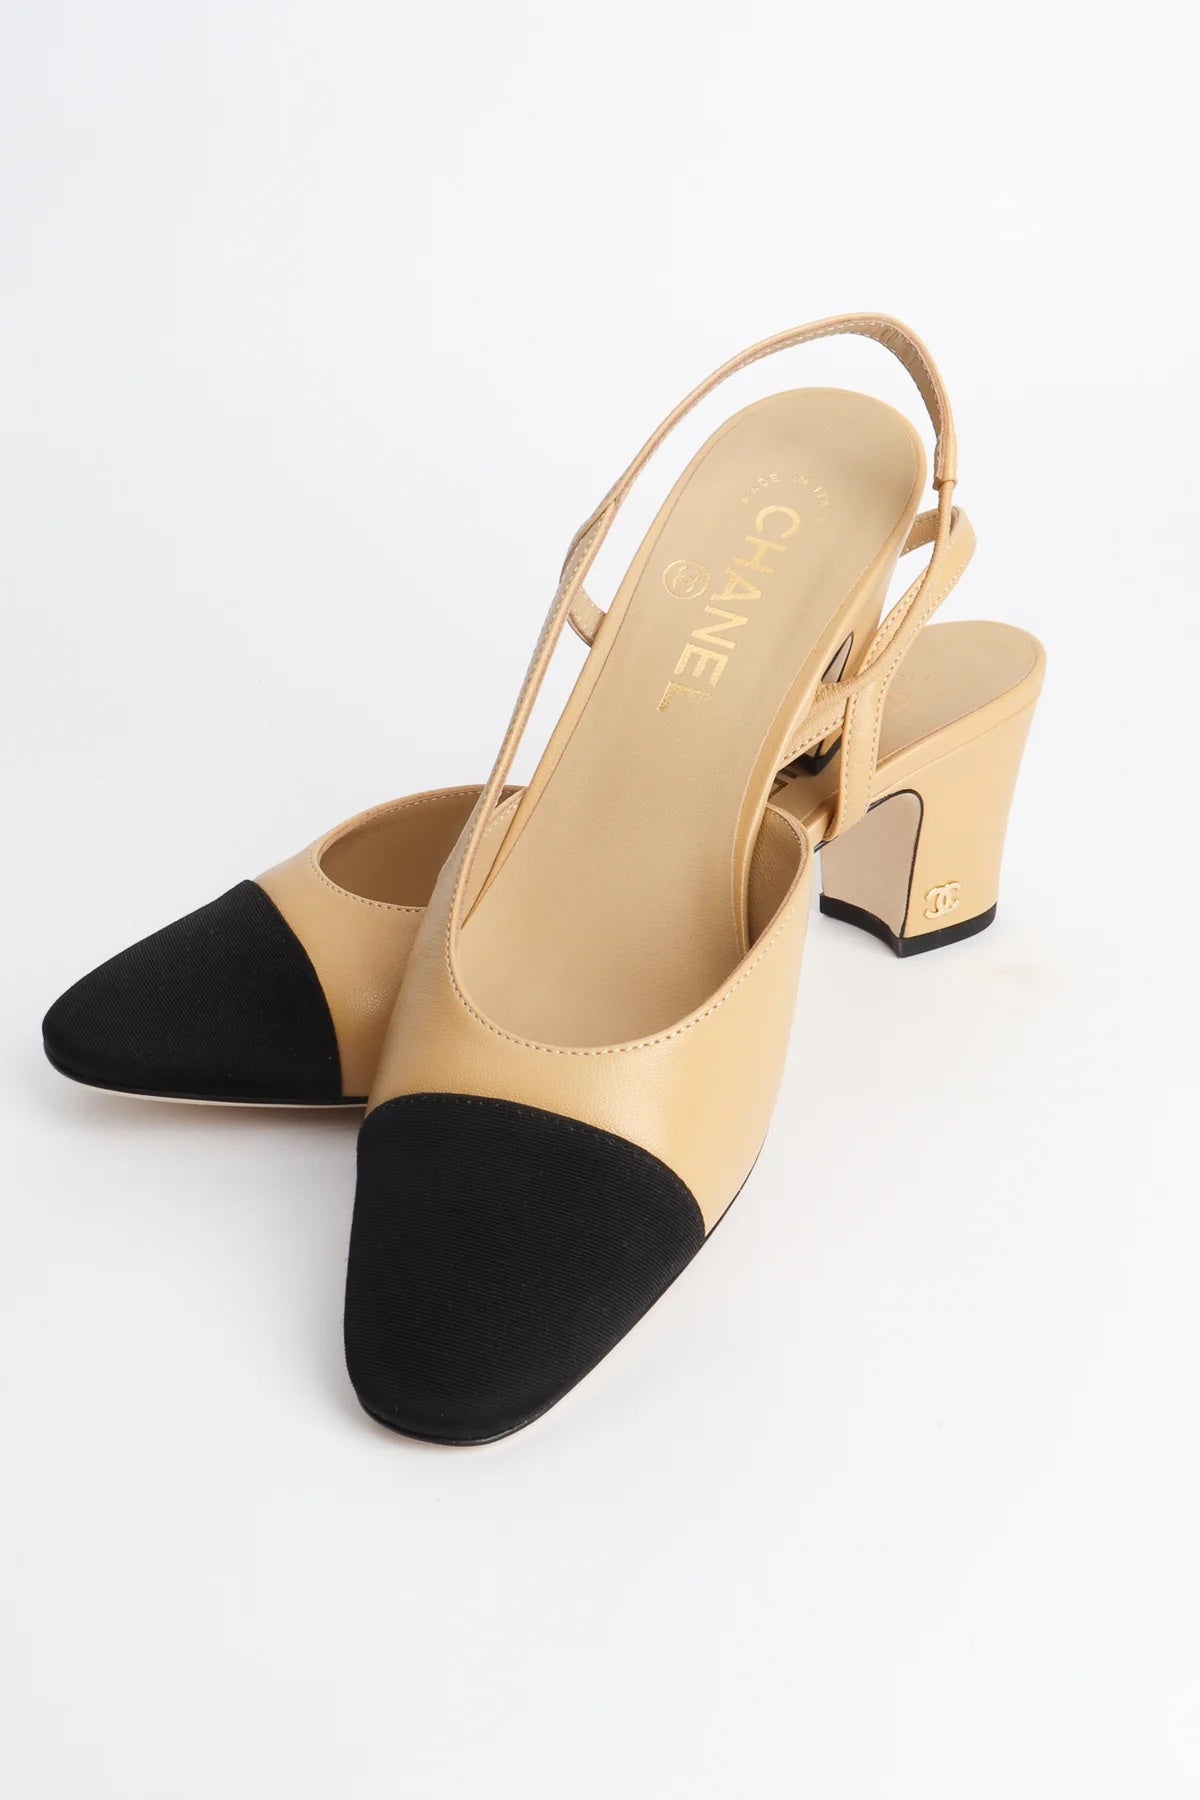 Chanel Quilted Slingback Sandals Leather Slingback Sandals - Black